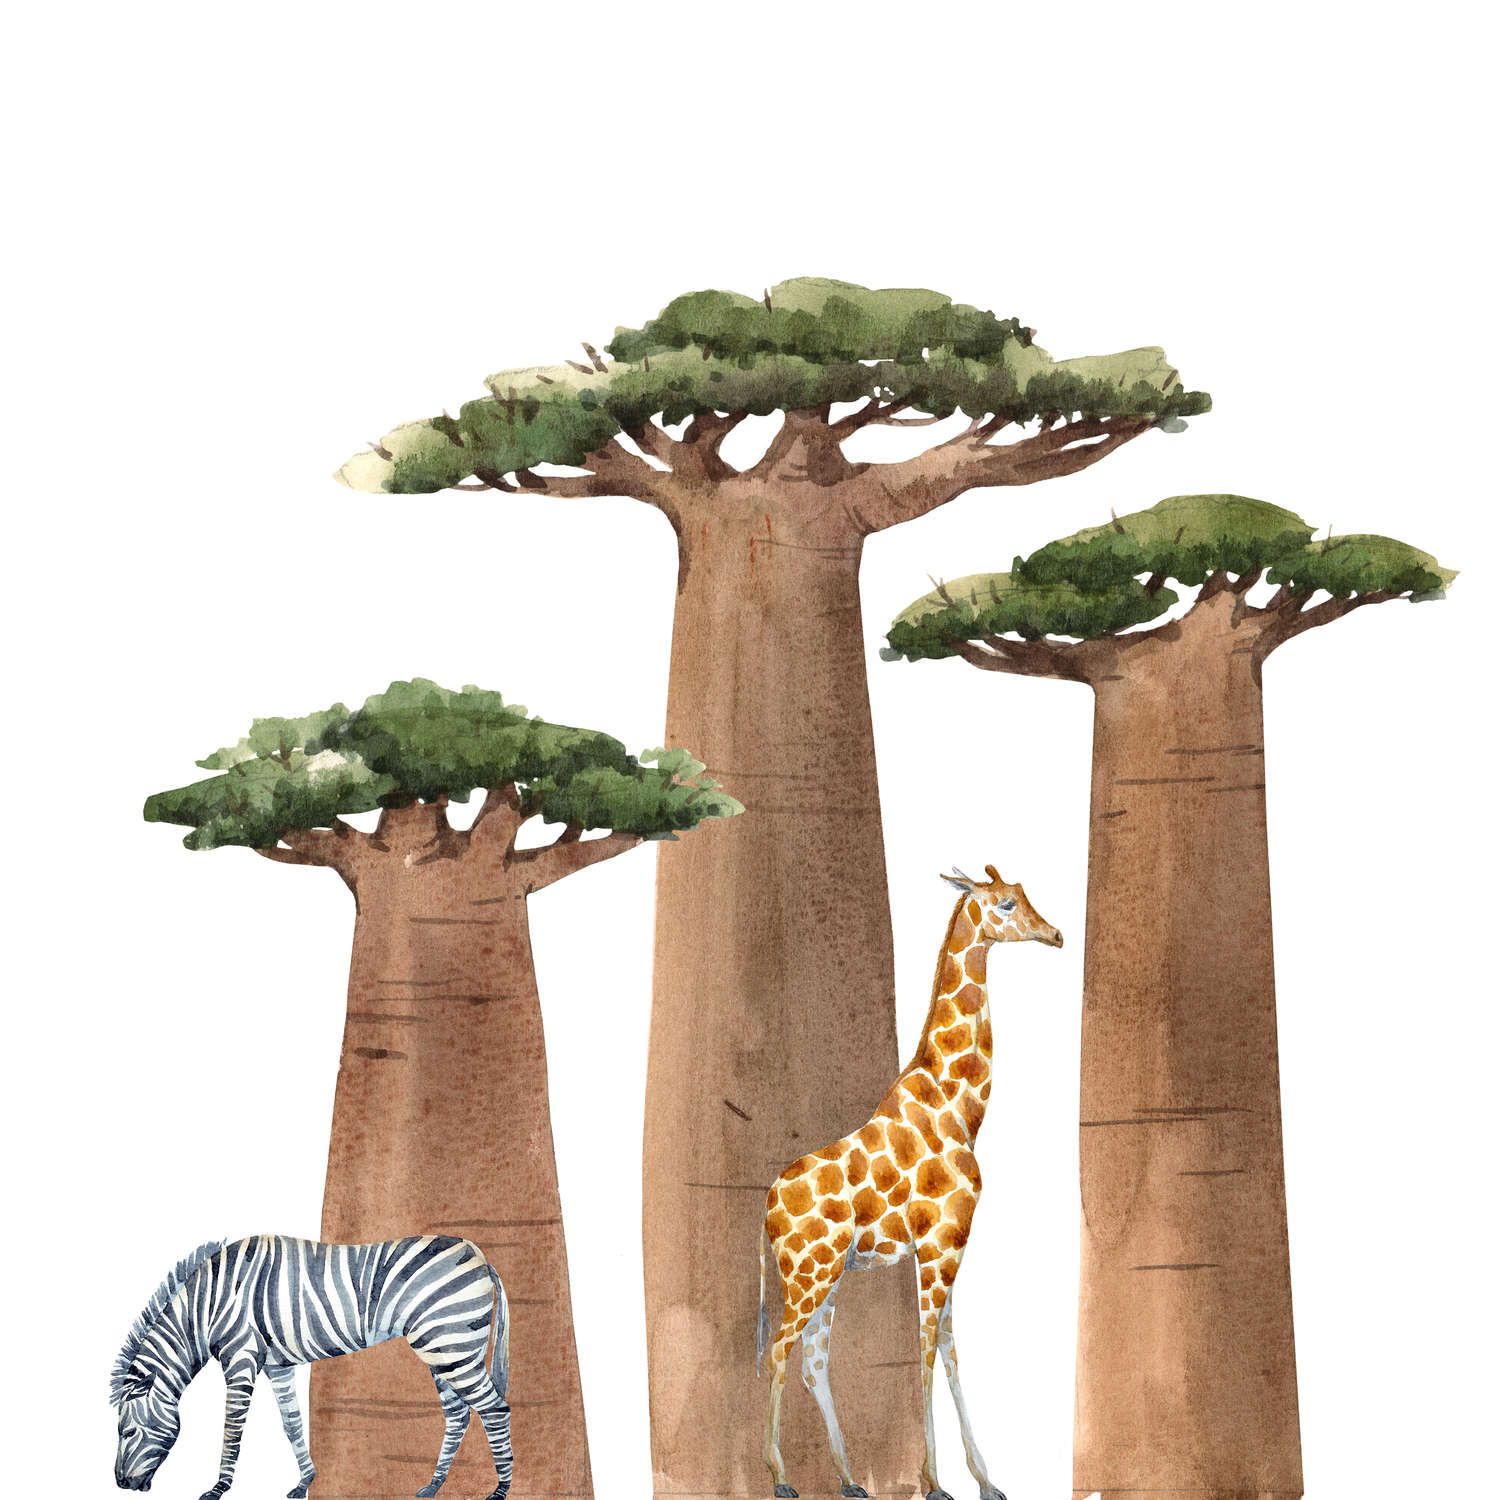             Photo wallpaper Savannah with Giraffe and Zebra - Smooth & matt non-woven
        